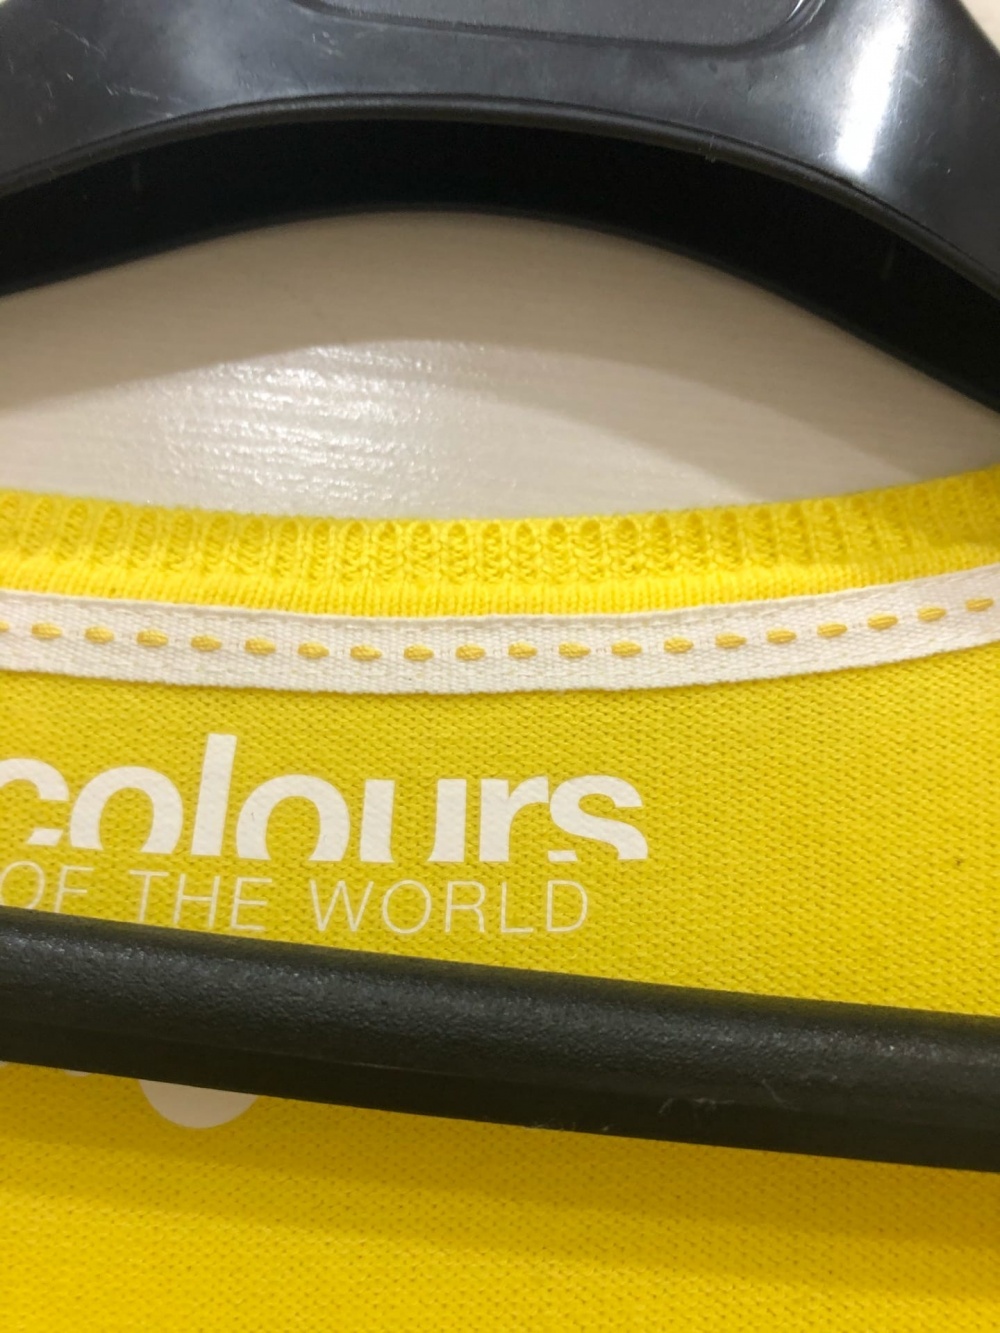 Кардиган Colours of the World.Размер М